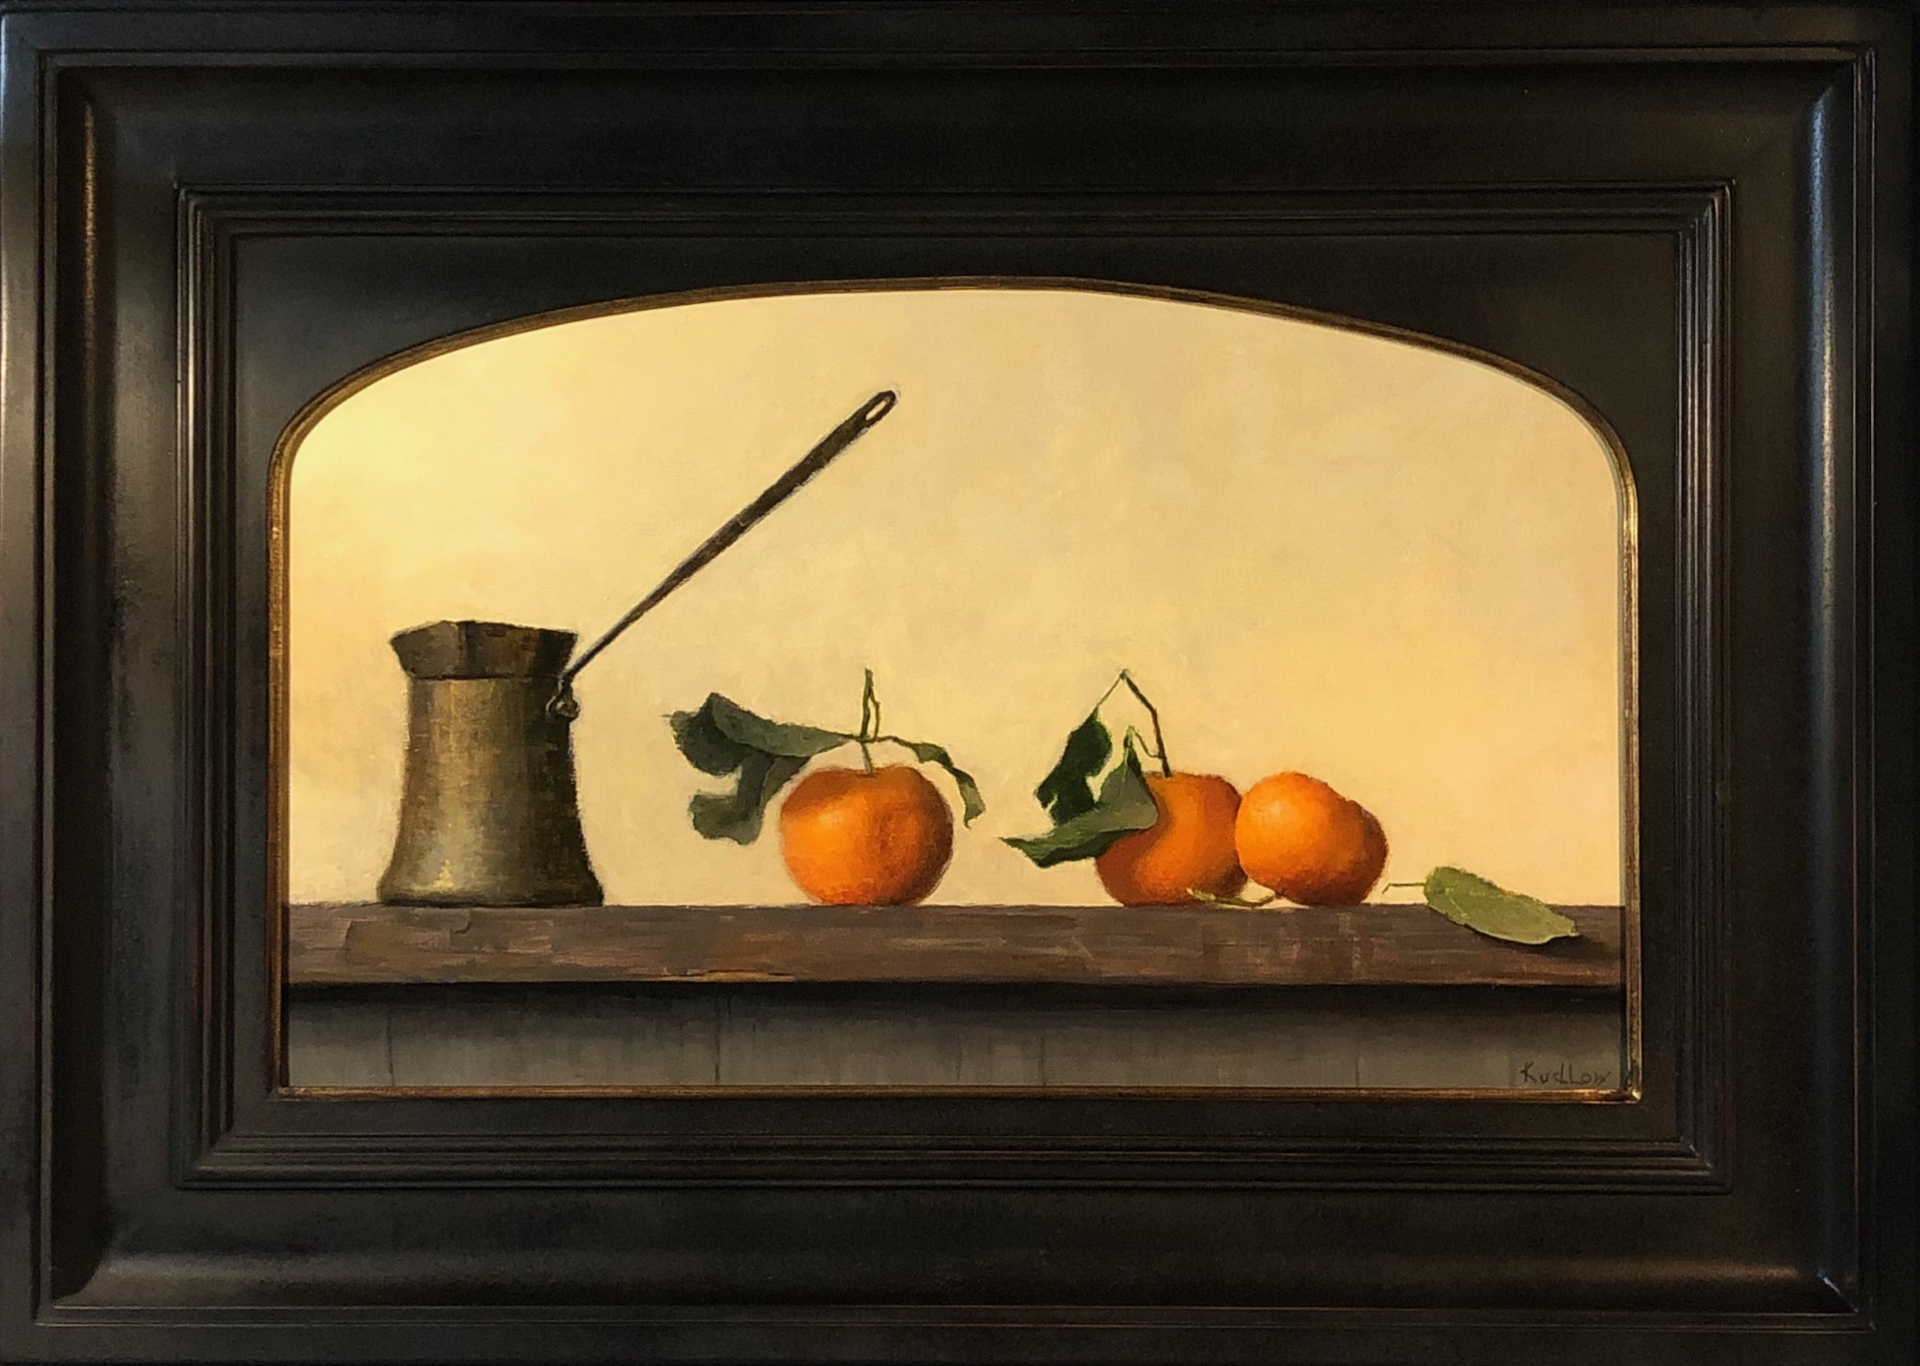 Mandarins, 2019 by Judith Pond Kudlow